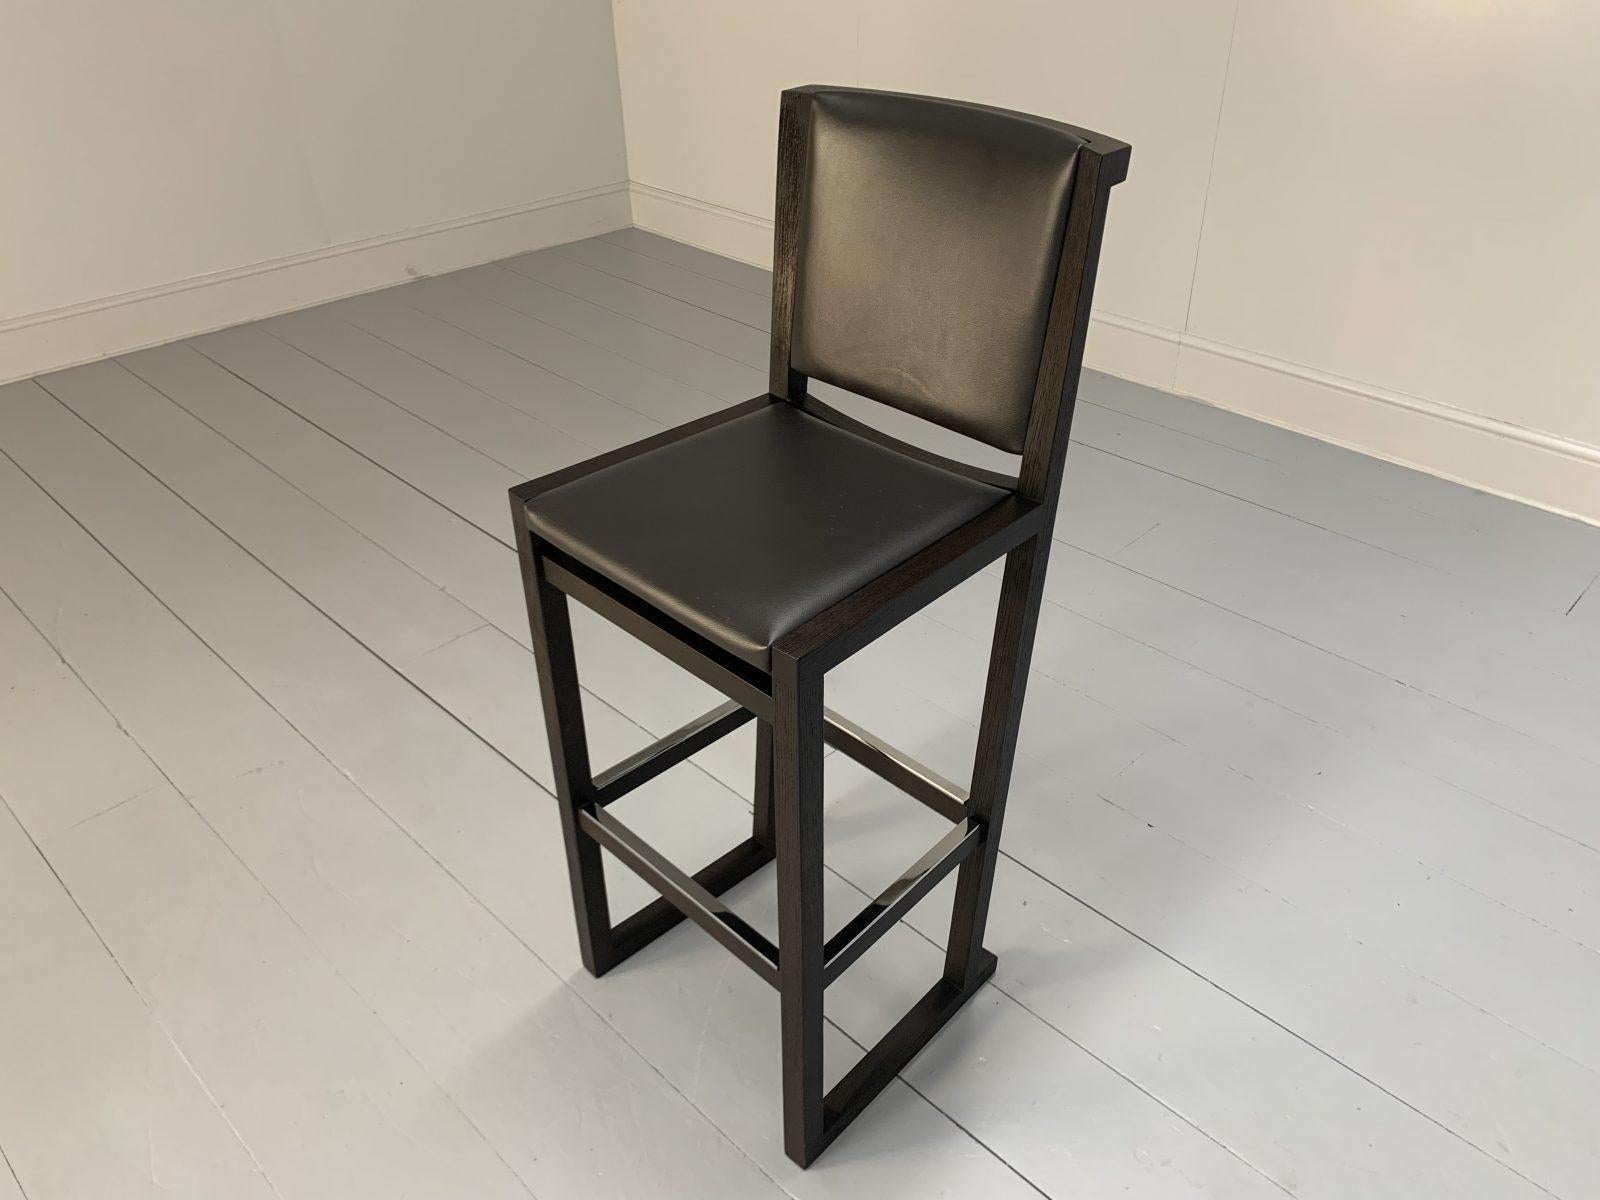 Pair of B&B Italia “Musa SM46G” Tall Bar Stool Chairs – In Dark Grey “Kasia” Lea For Sale 4